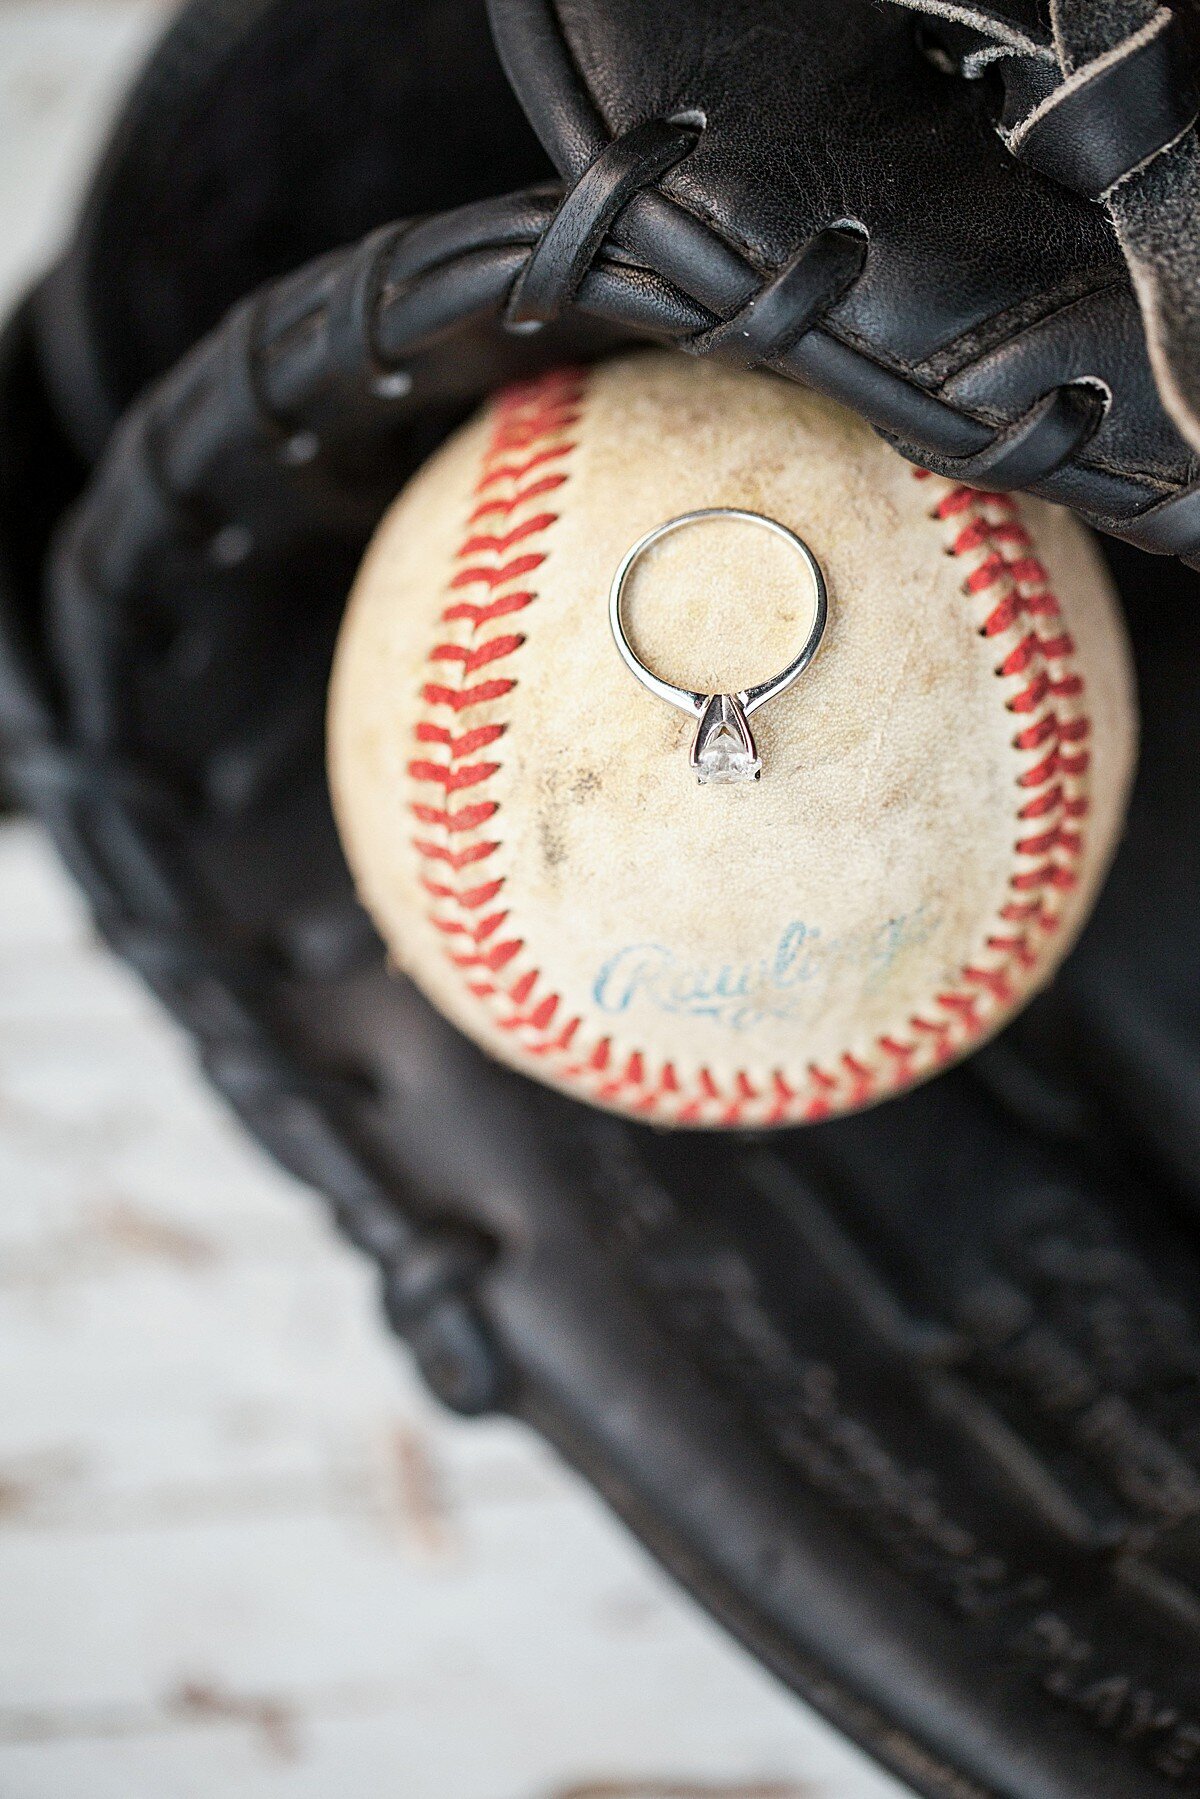 Engagement ring resting on baseball in glove